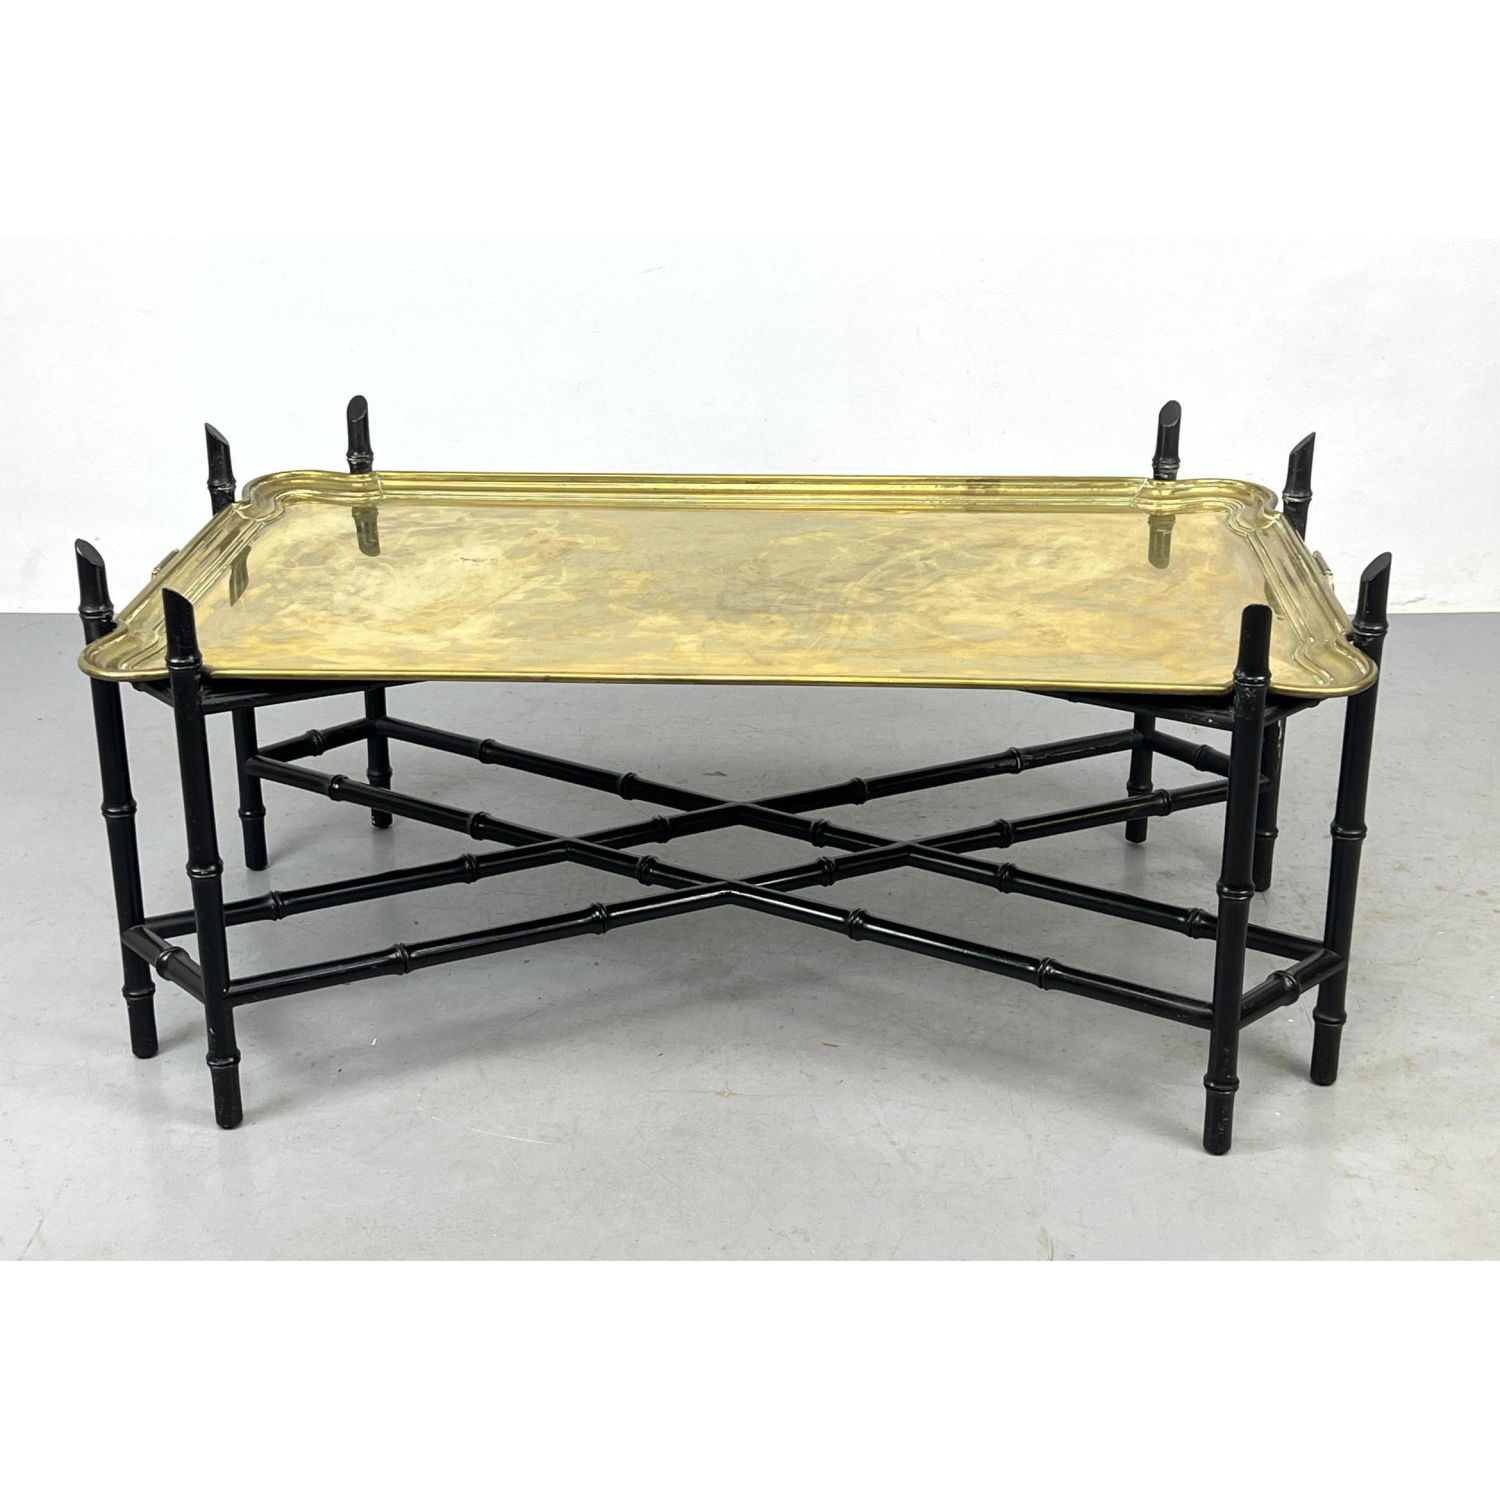 Baker style Brass Tray Top Table  2fefab